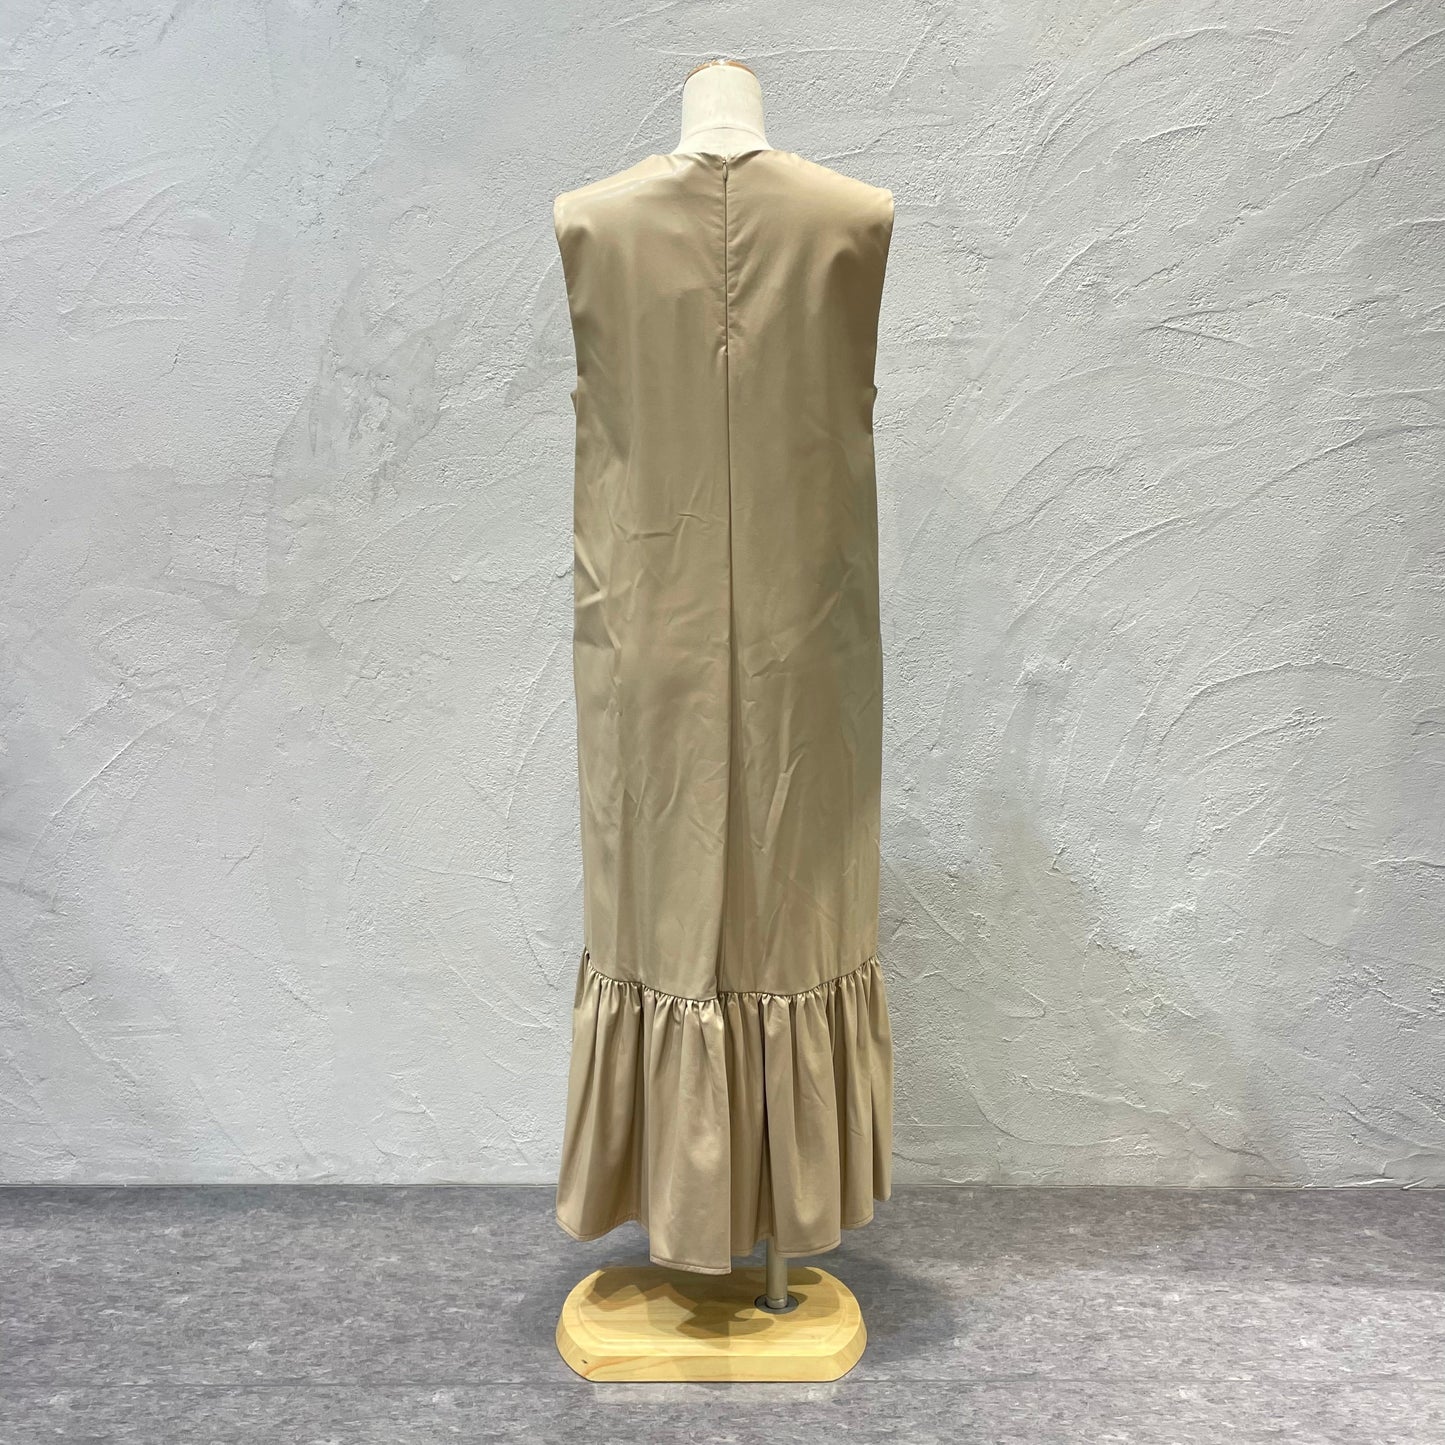 MICALLE MICALLE/人造皮革連衣裙